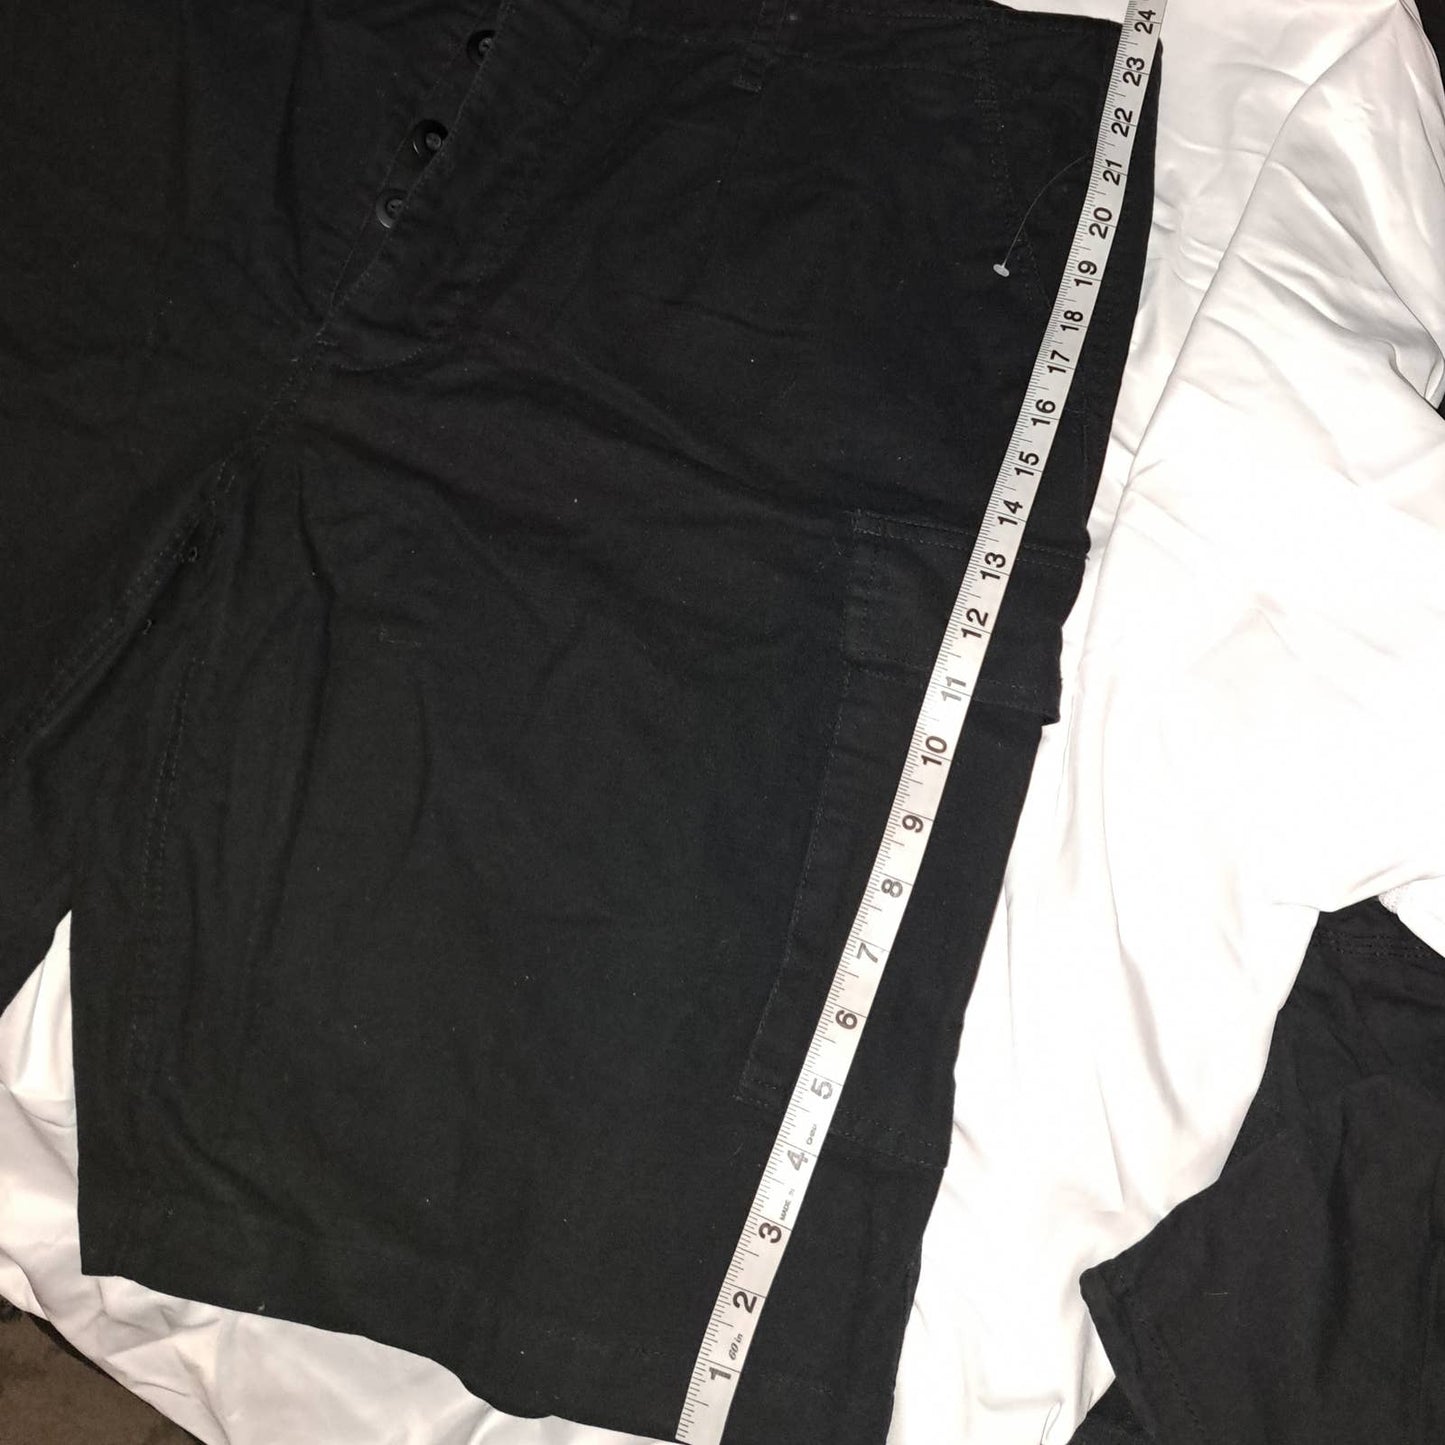 New Mens XXL Army style black prewashed Moleskin Bermuda military shorts